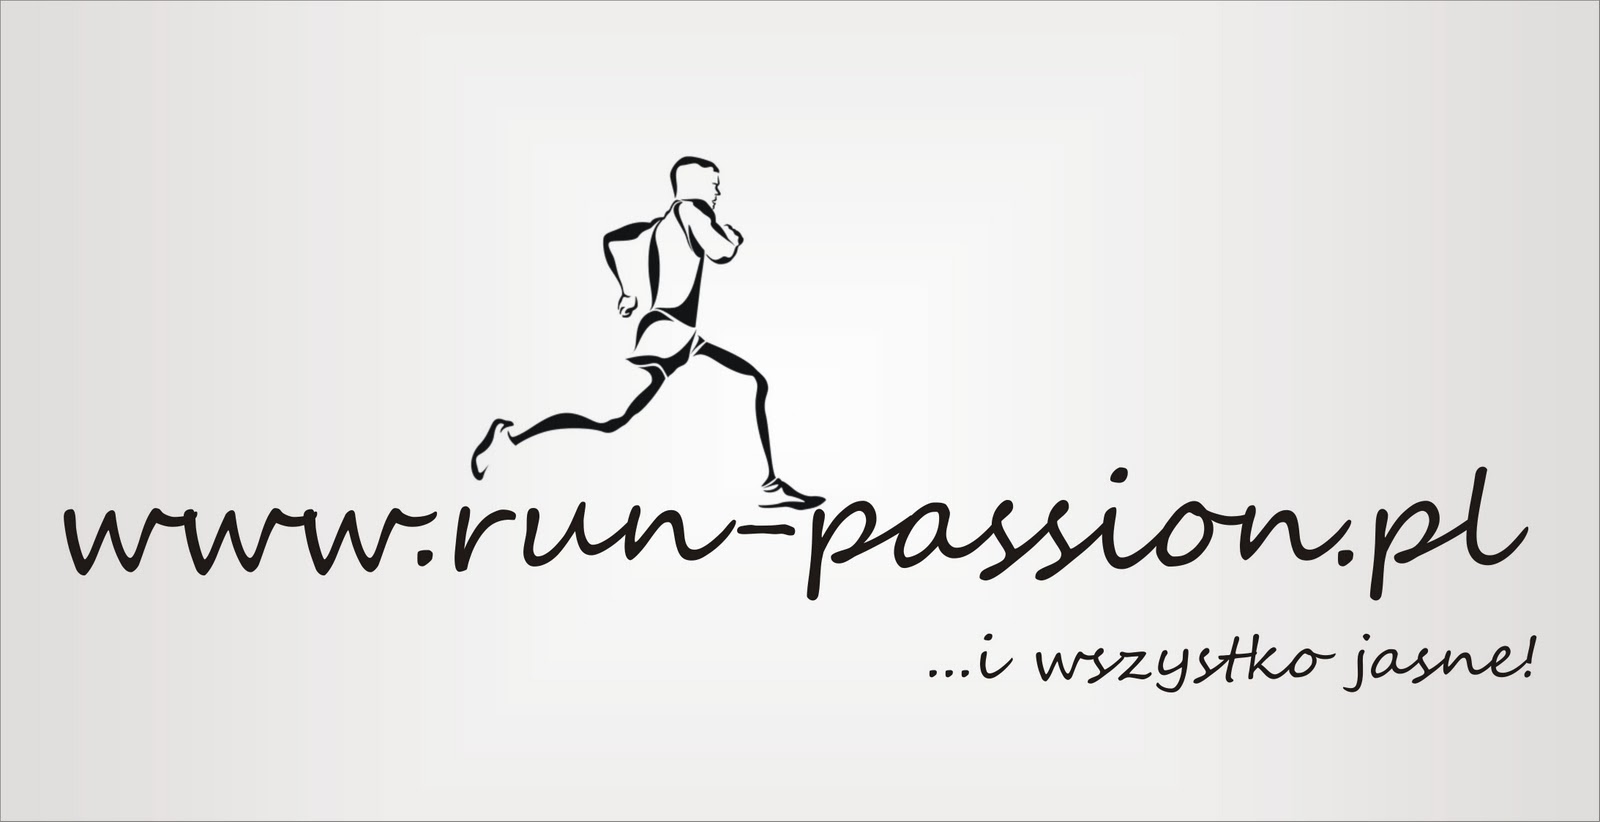 run-passion duze